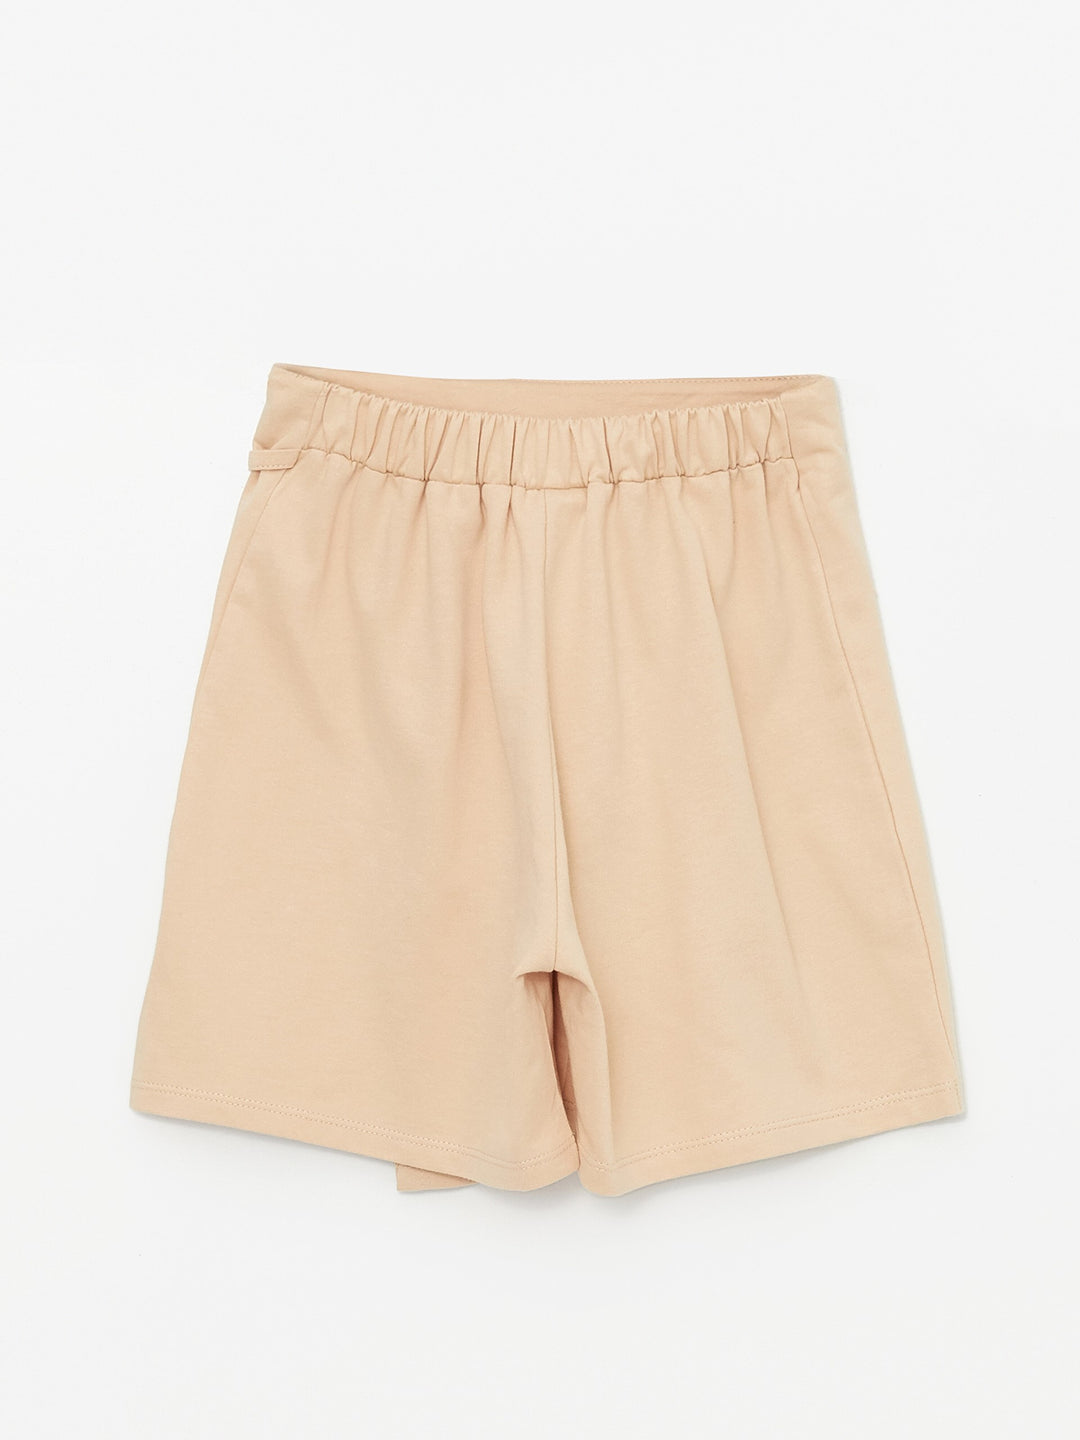 Basic Girls Shorts Skirt with Elastic Waist